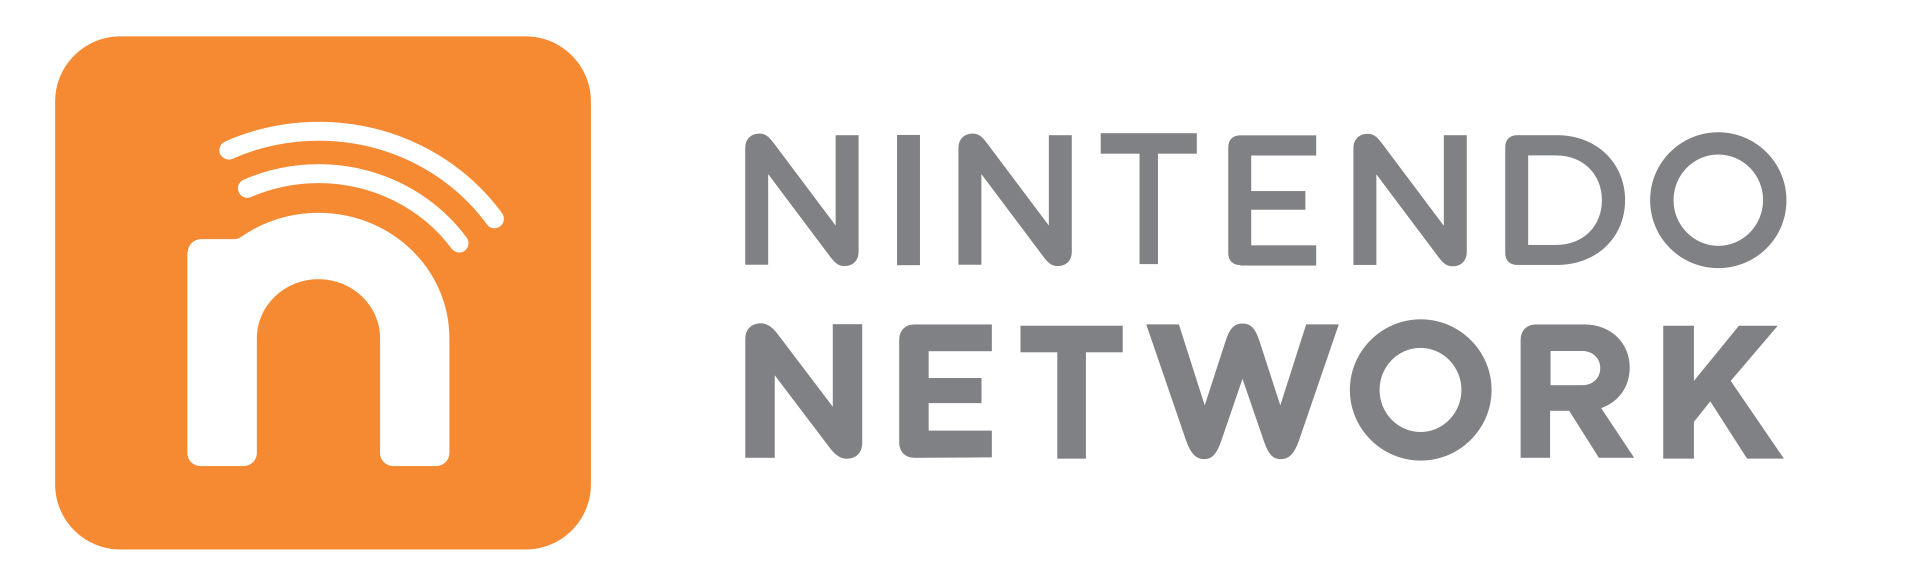 Nintendo Network logo